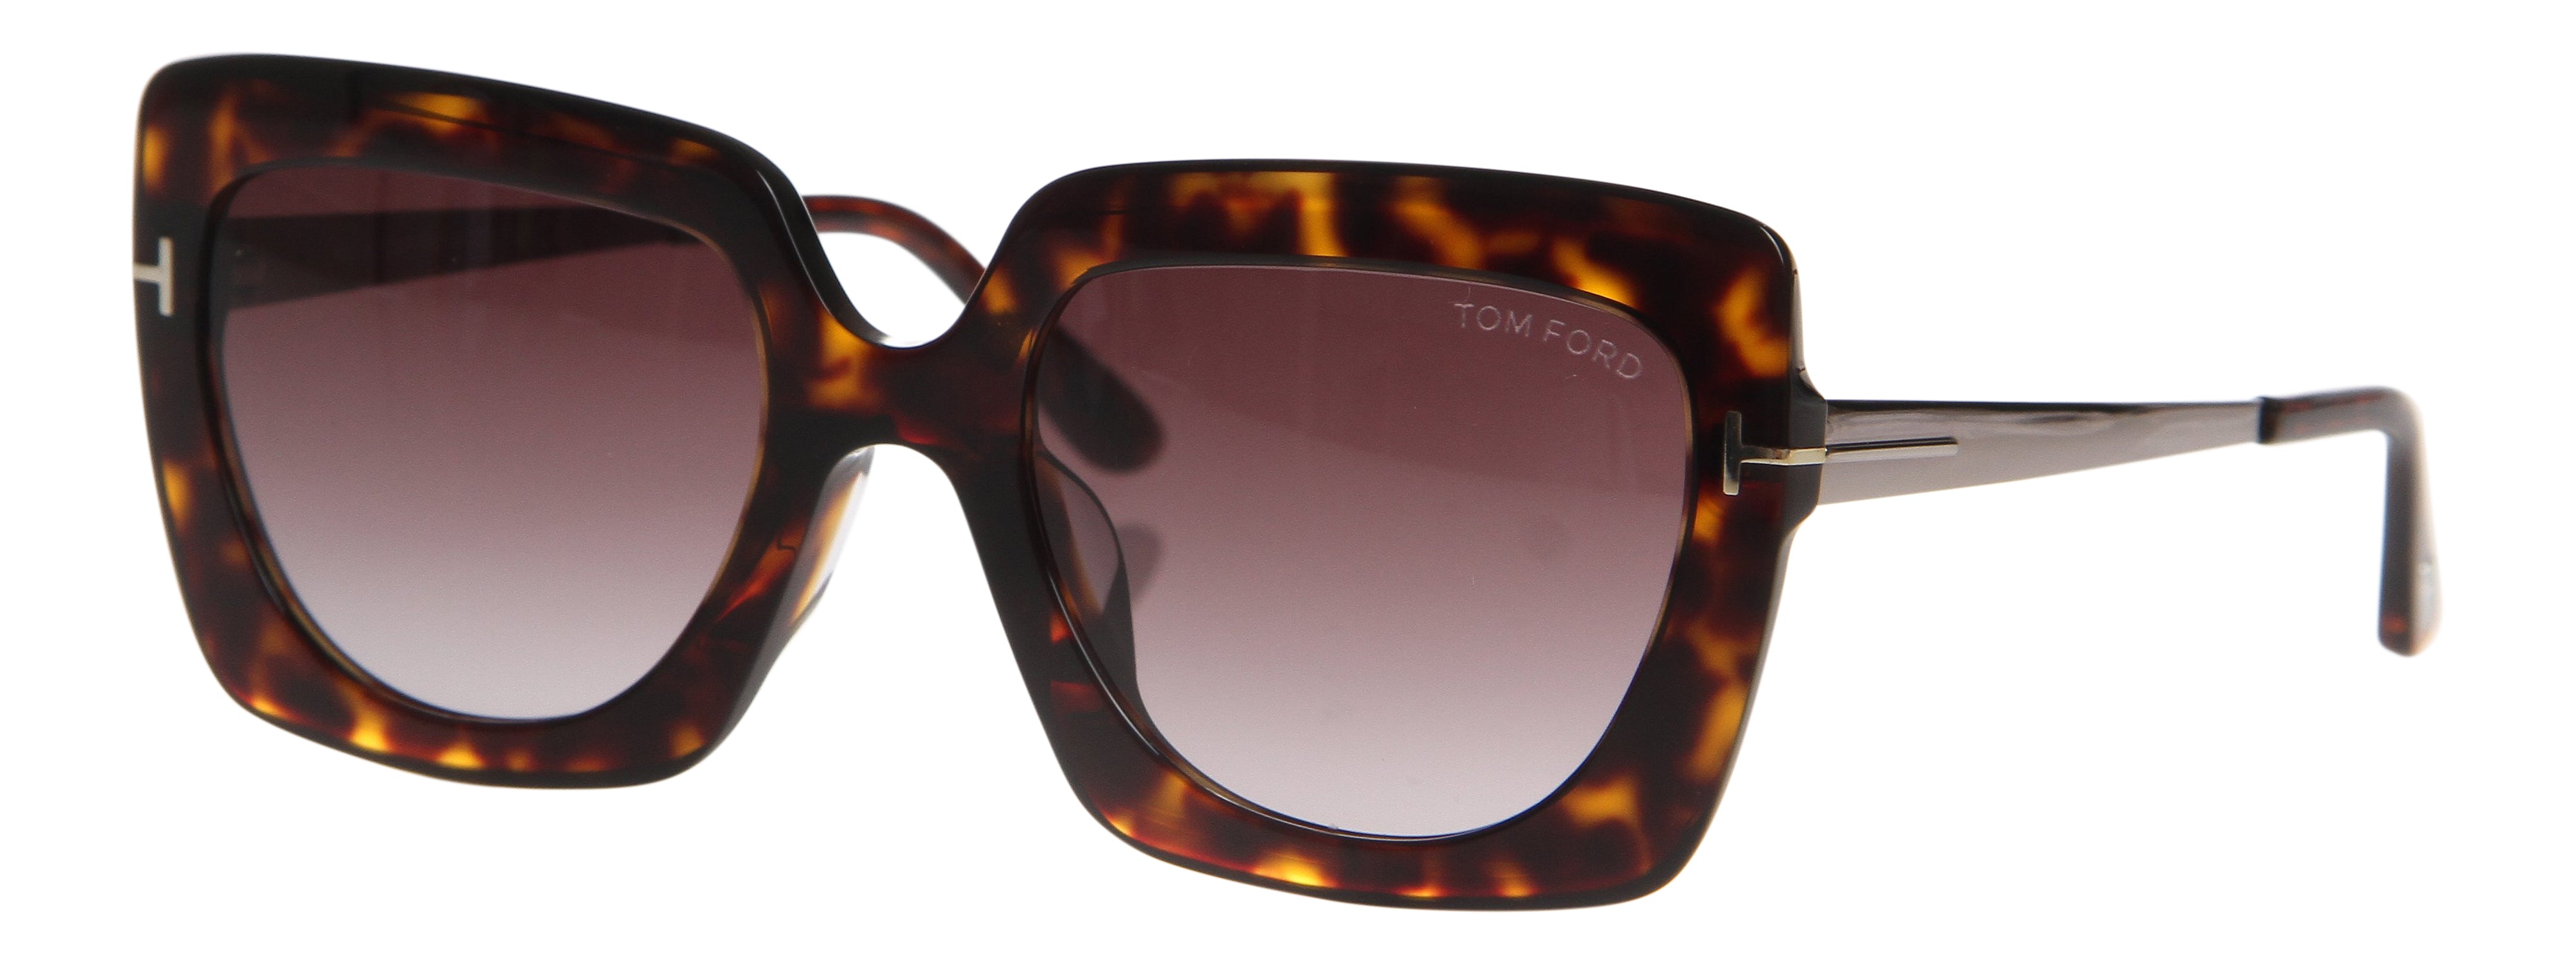 Tom Ford FT0646 53 Green & Black Shiny Sunglasses | Sunglass Hut USA